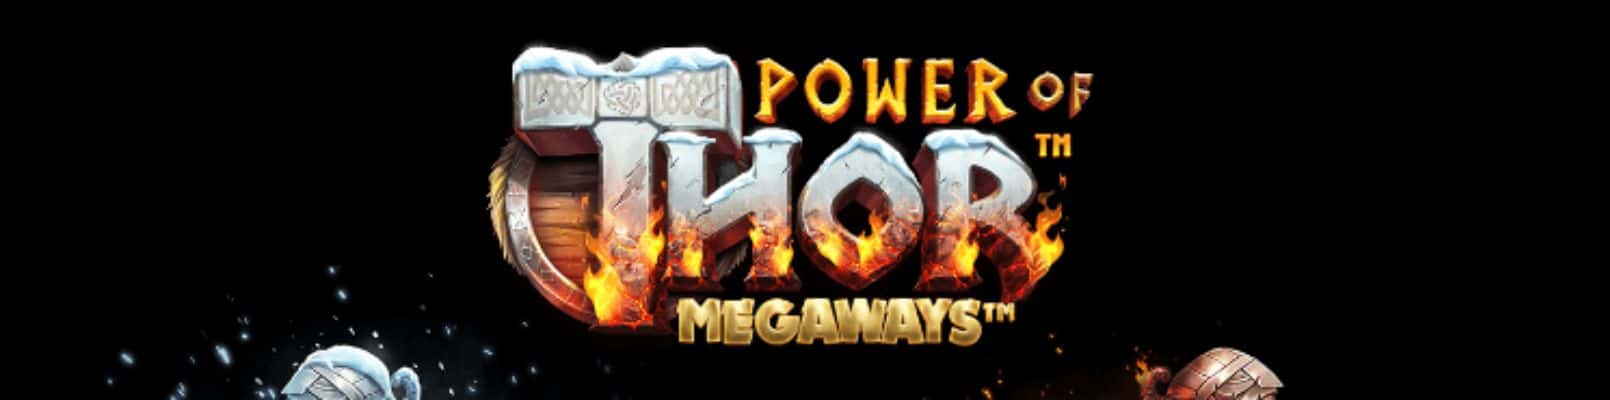 power of thor megaways jucatori